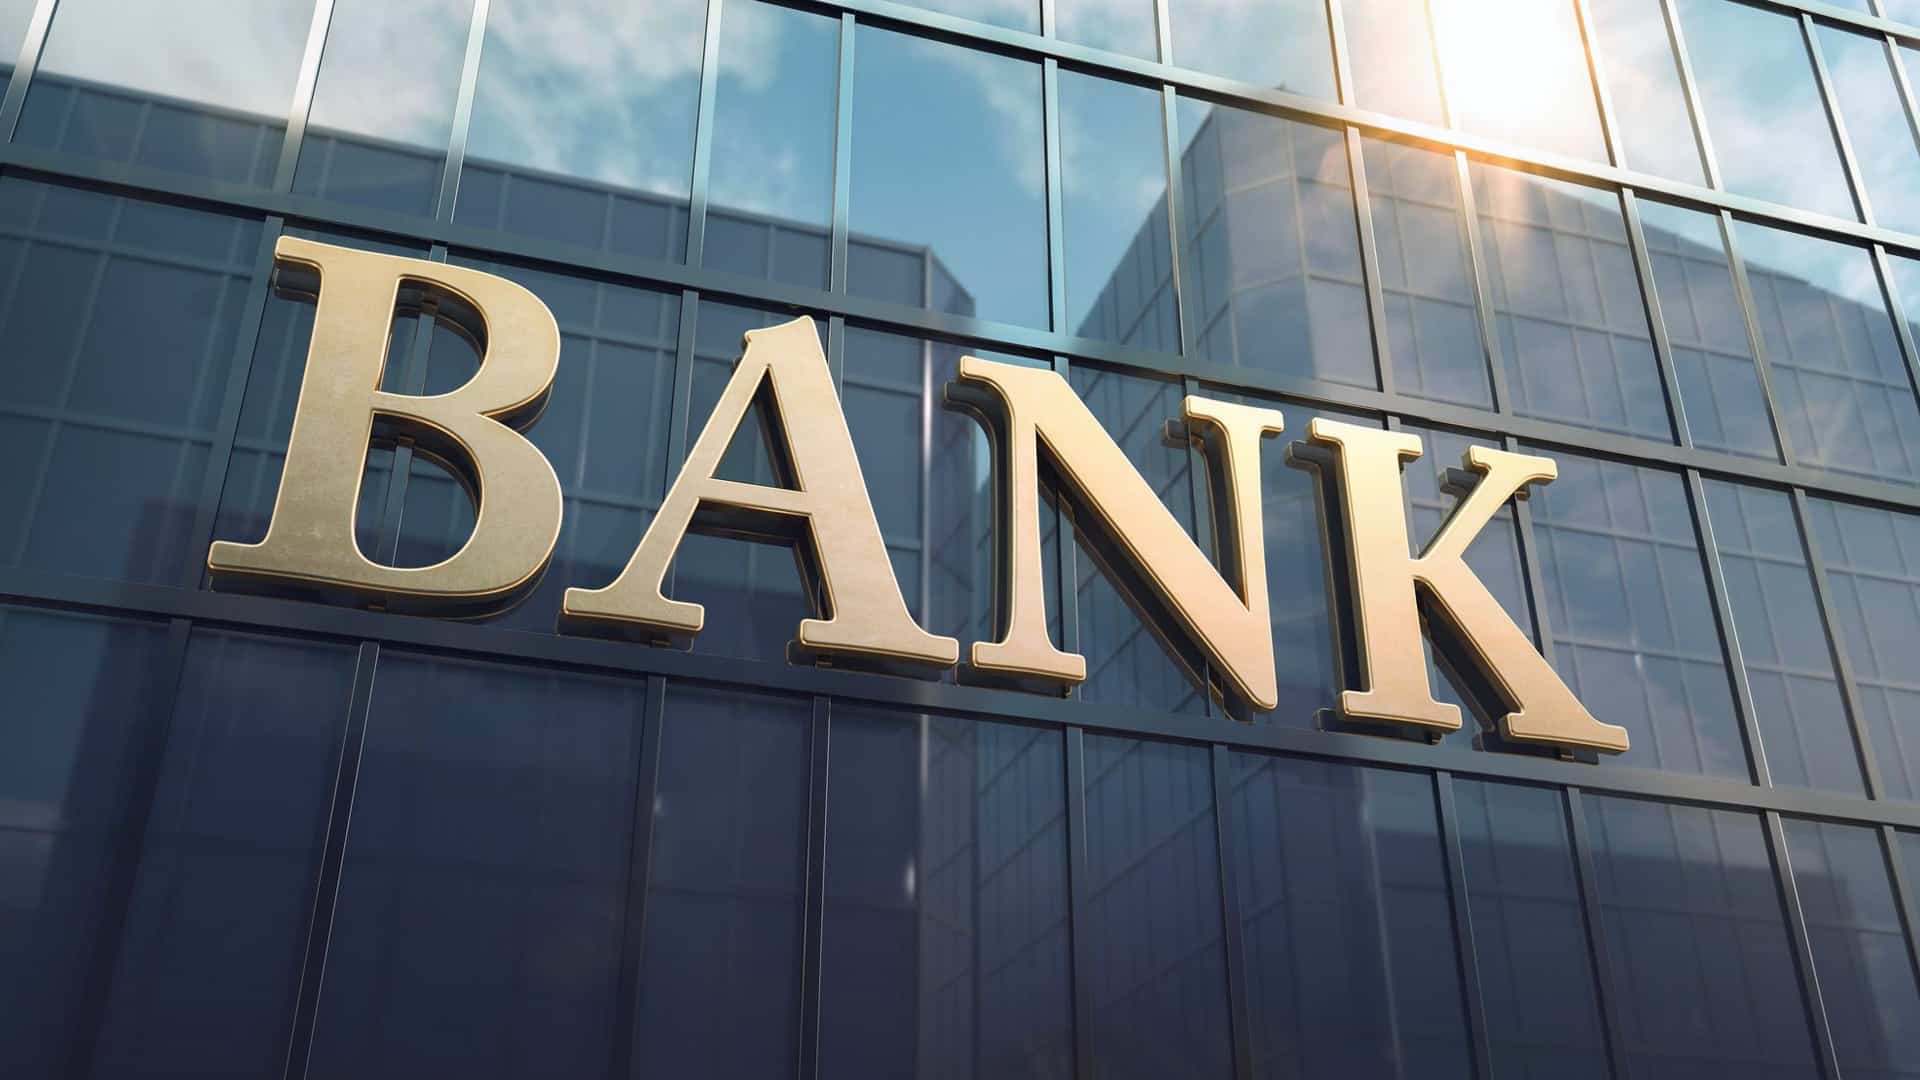 Govt raises maximum tenure of PSU banks' CEO to 10 years